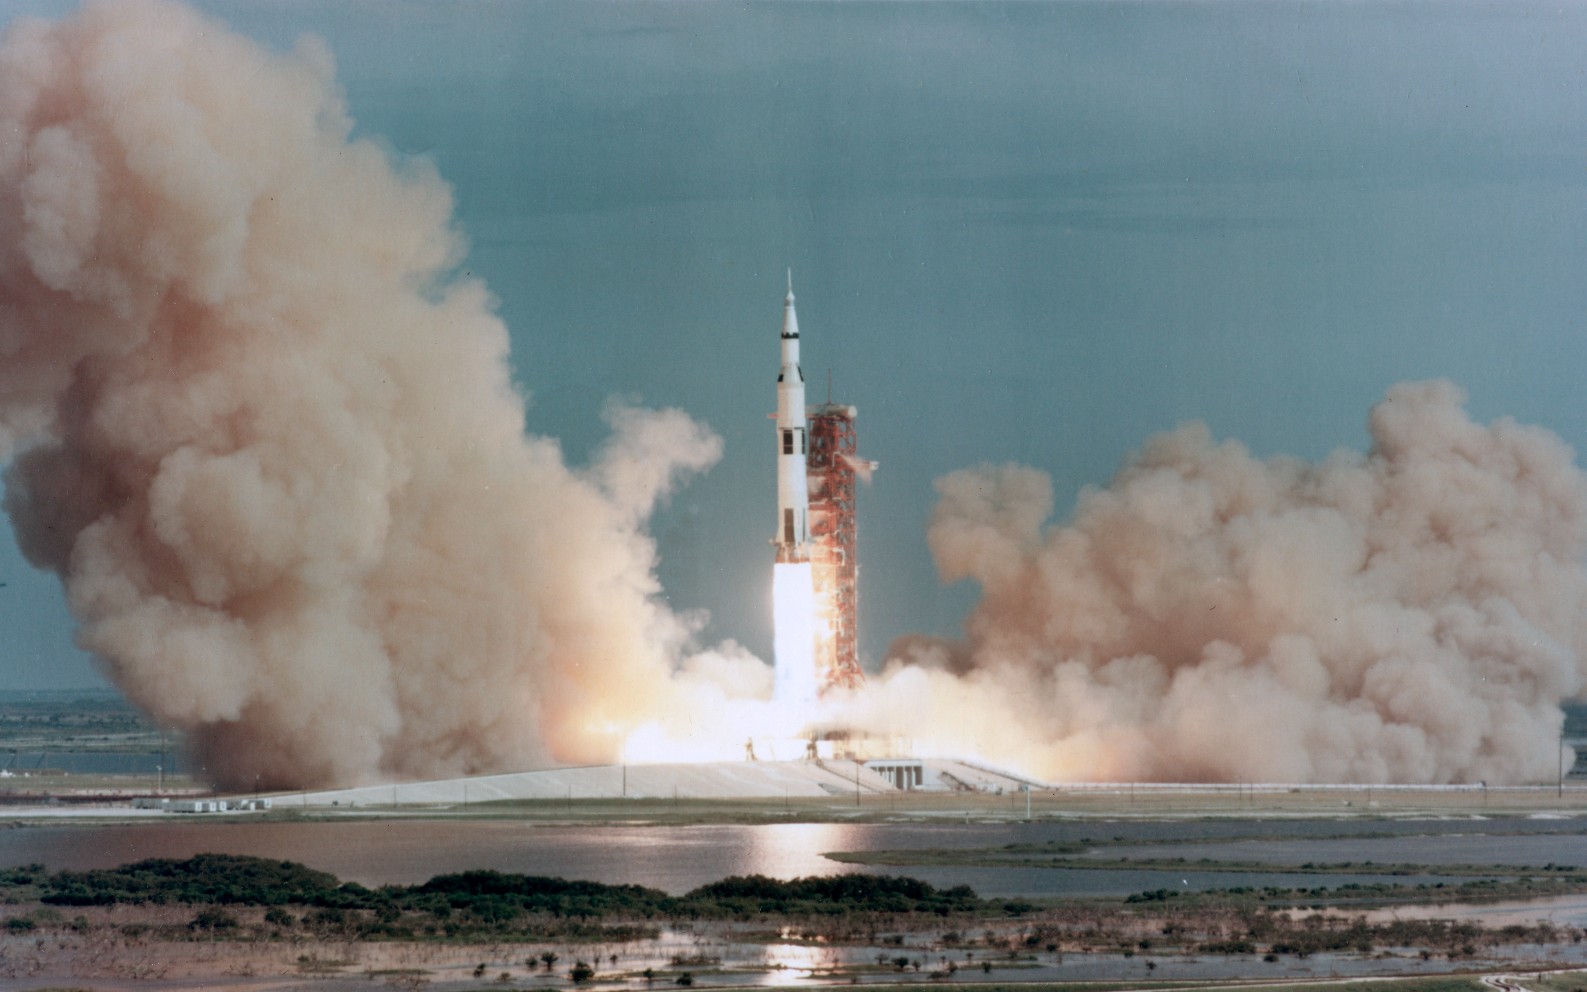 jfk space program of 1962